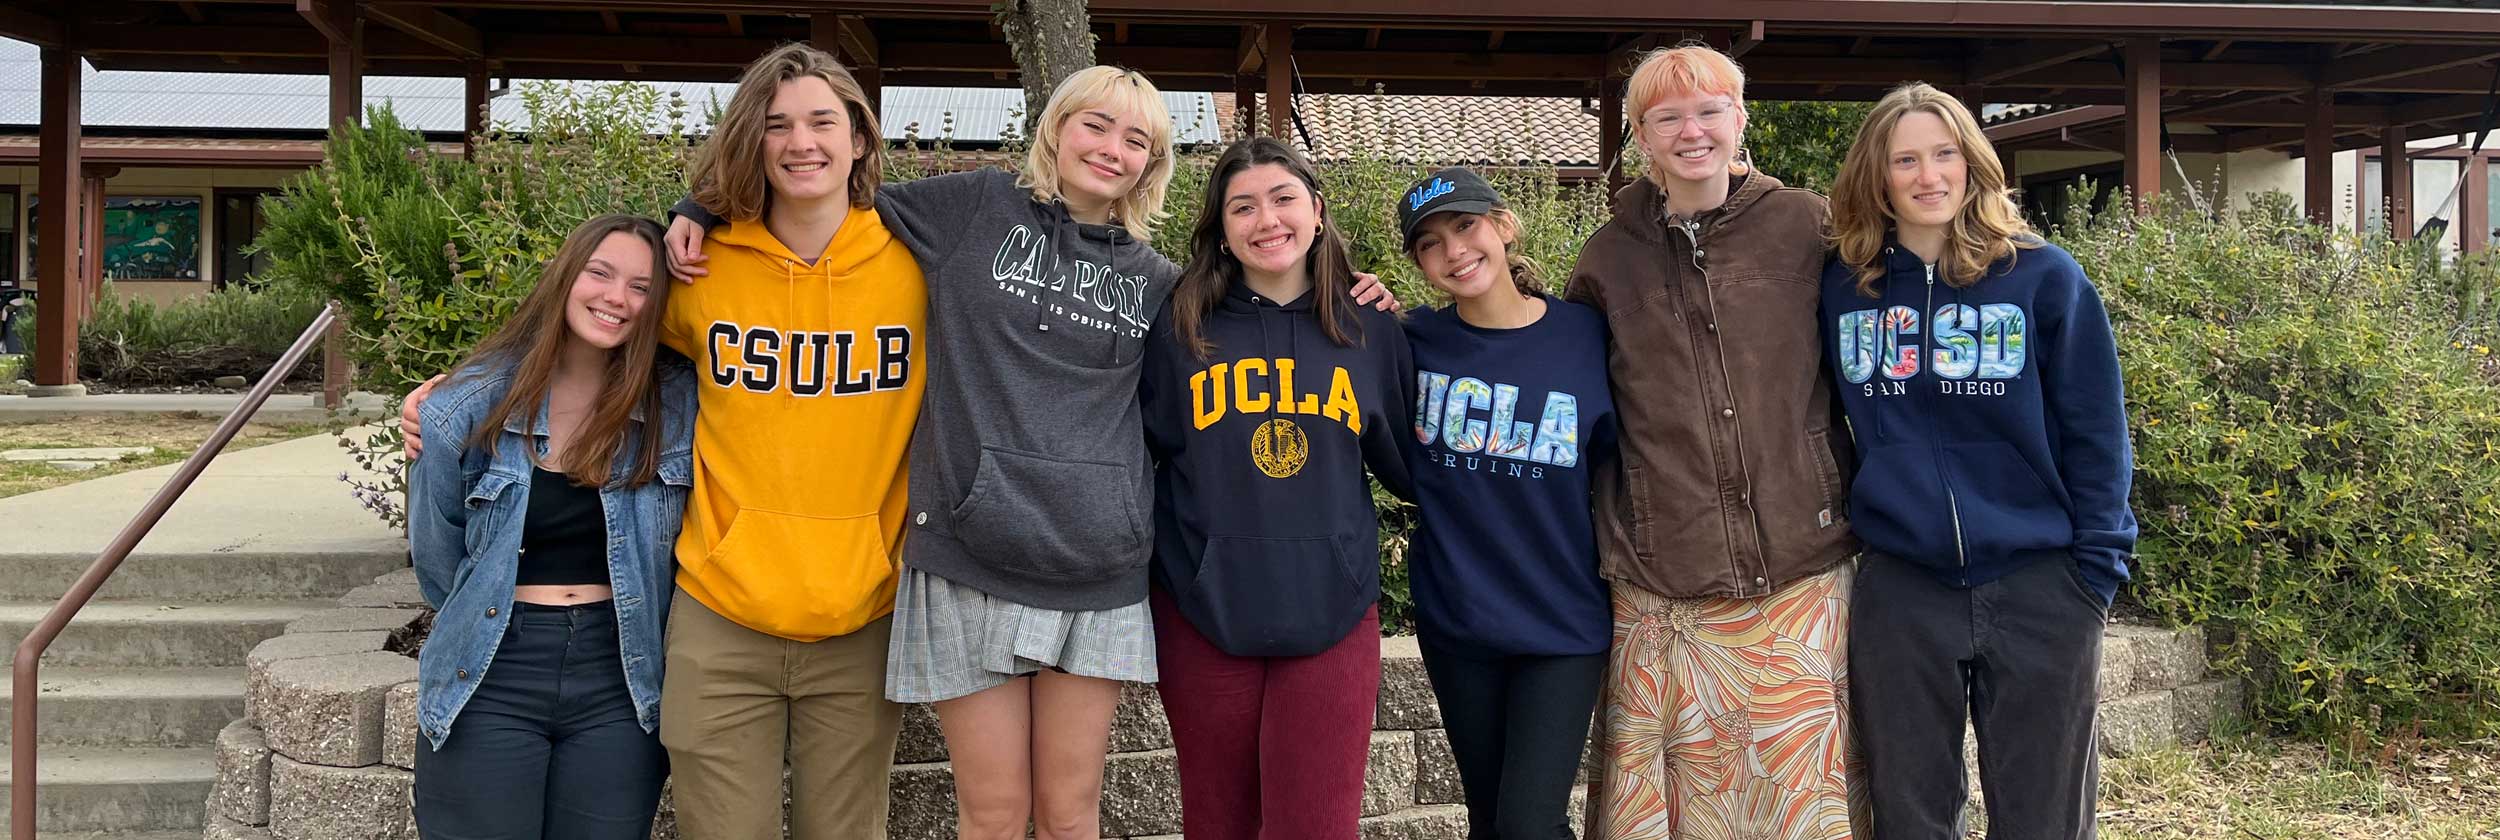 Class of 2022 College sweatshirts